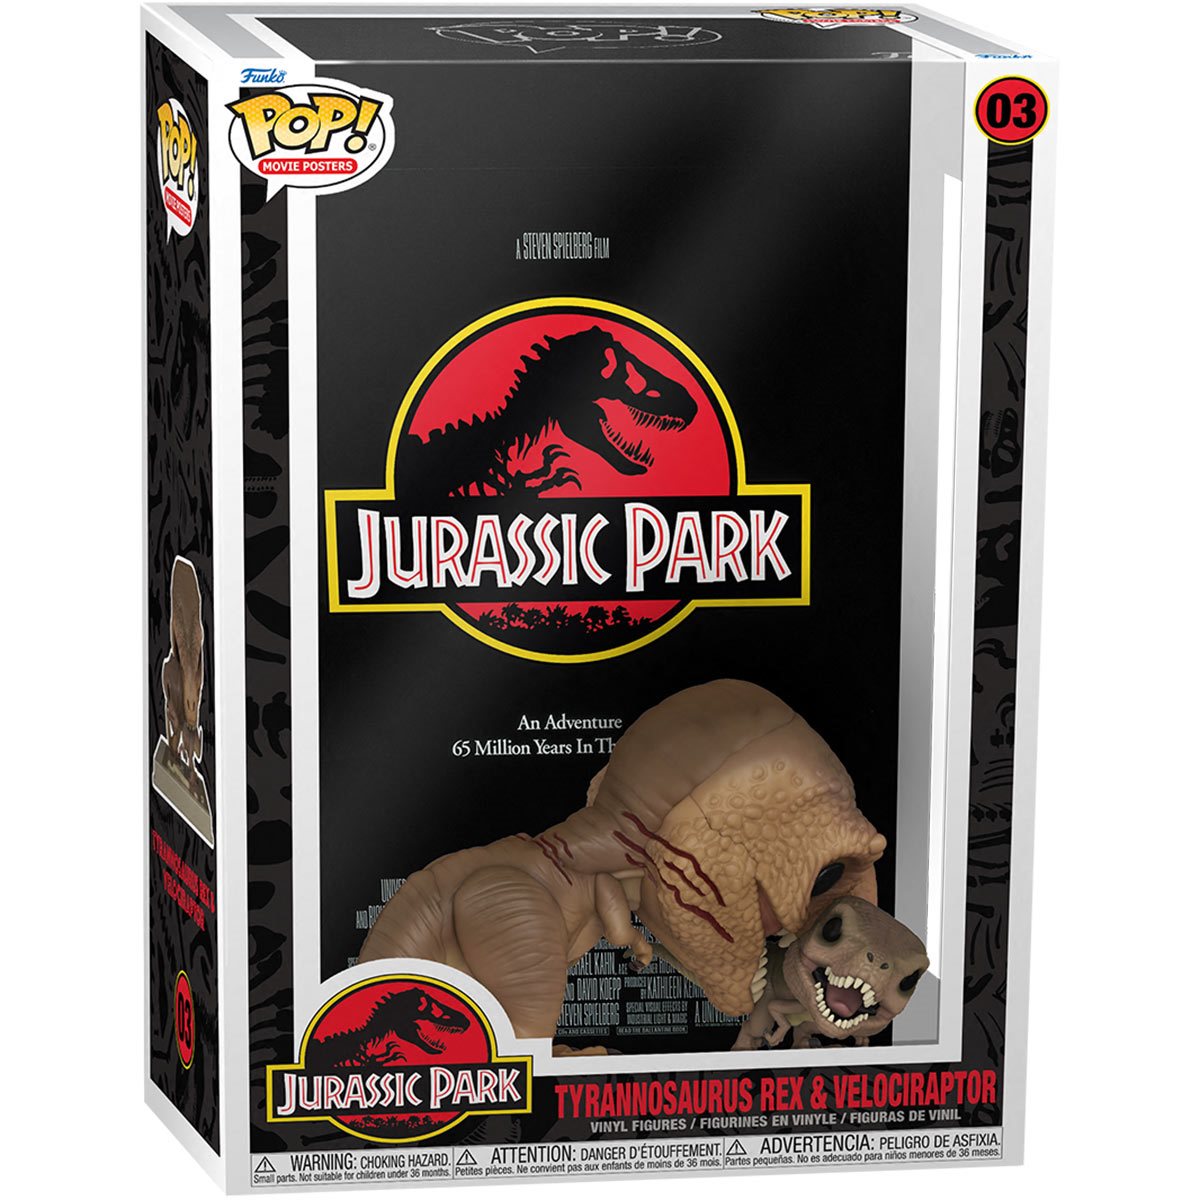 Movie Poster: Jurassic Park - Tyrannosaurus Rex & Velociraptor Pop! Vinyl Figure (03)